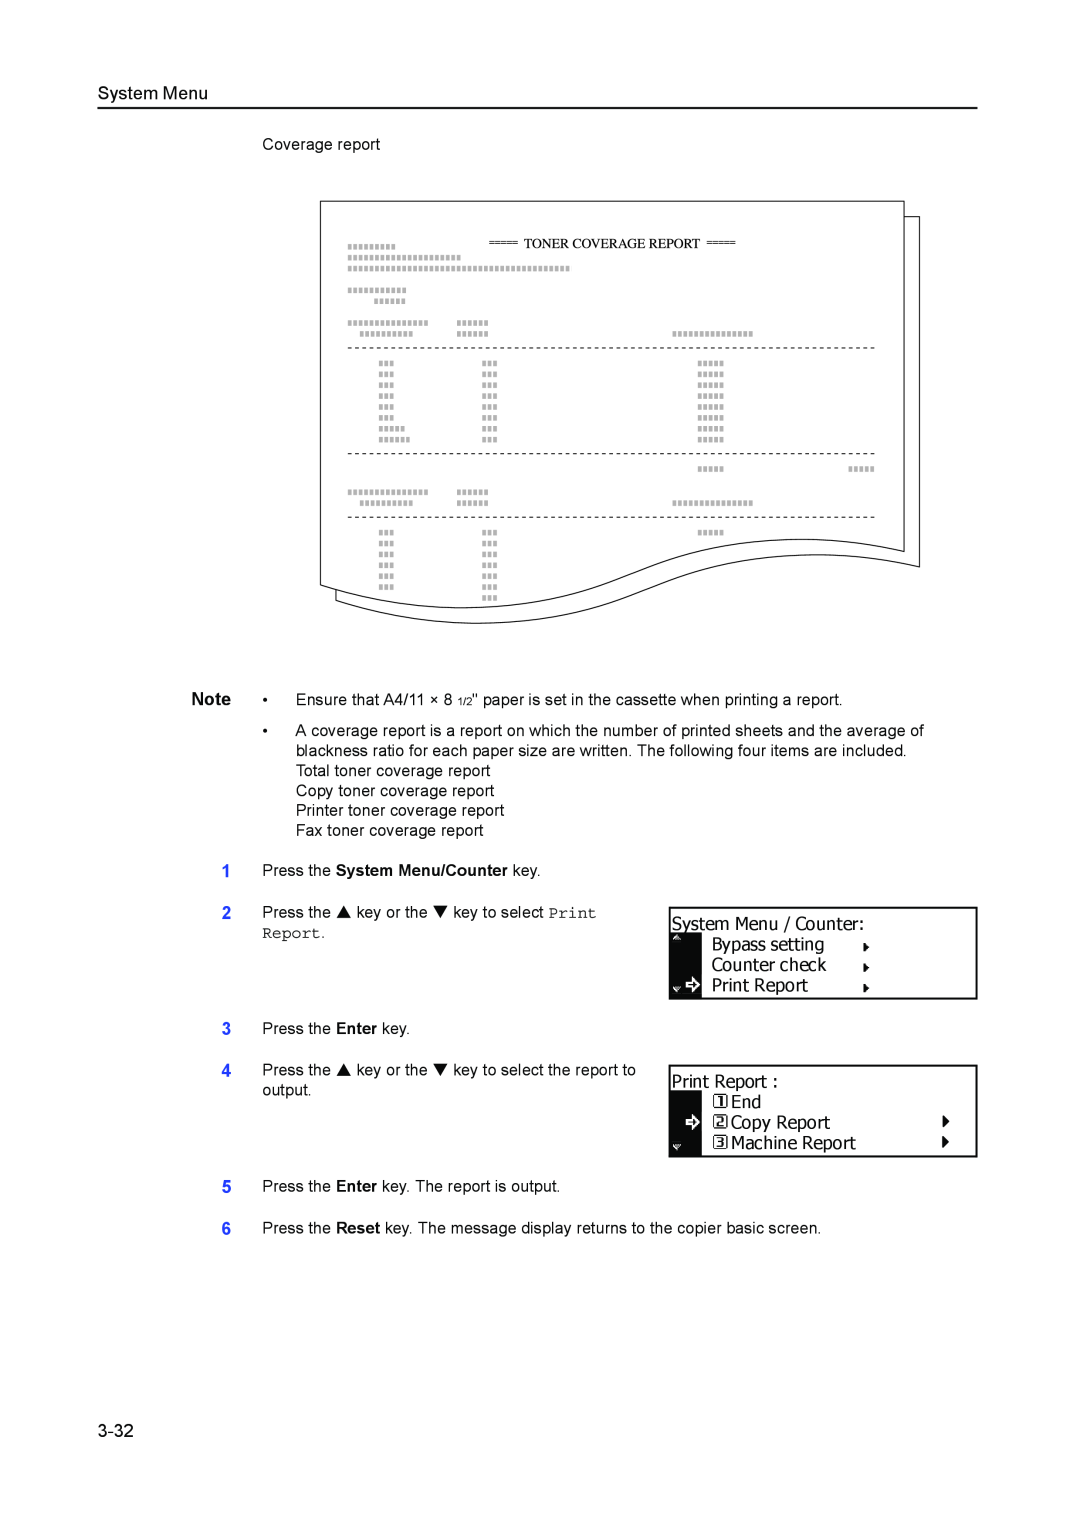 Kyocera 2550, 2050, 1650 manual 3-32, System Menu, Report 